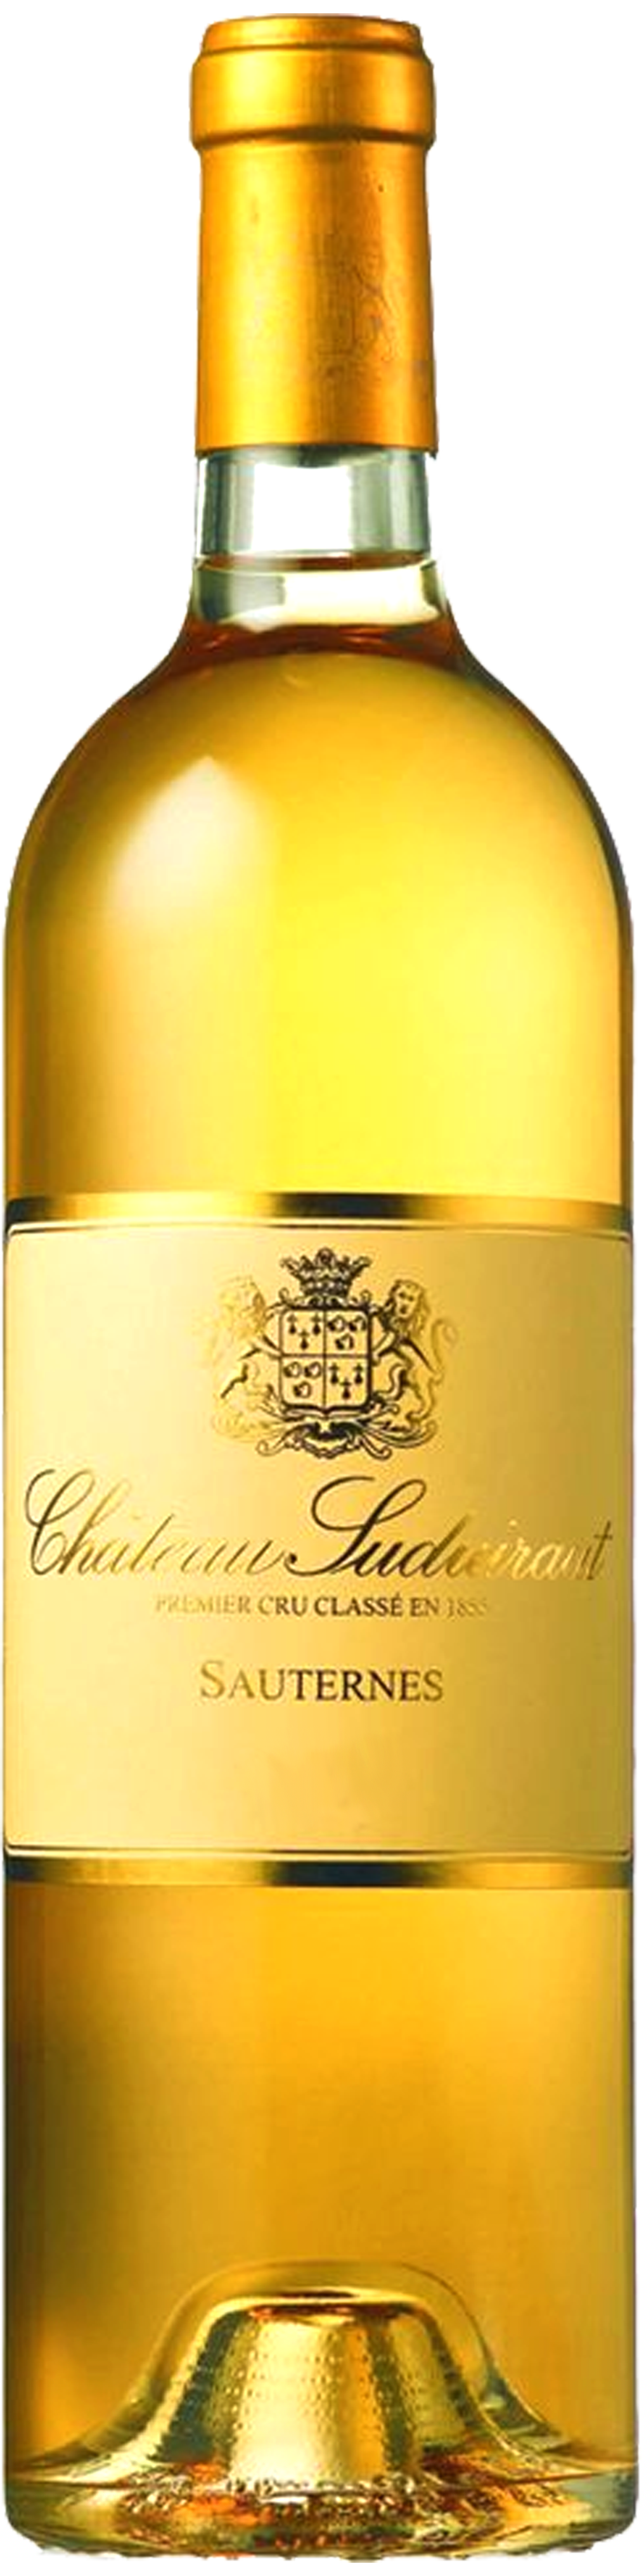 Image of product Château Suduiraut, 1er Cru Sauternes